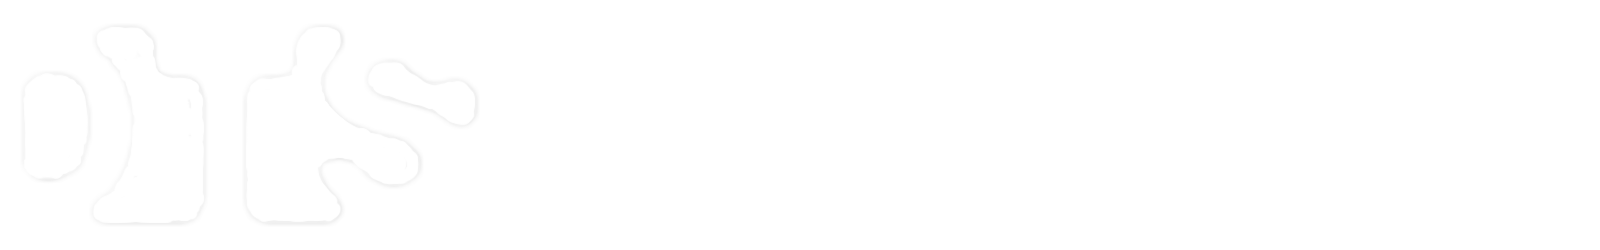 Bedford Digital Technology Solutions